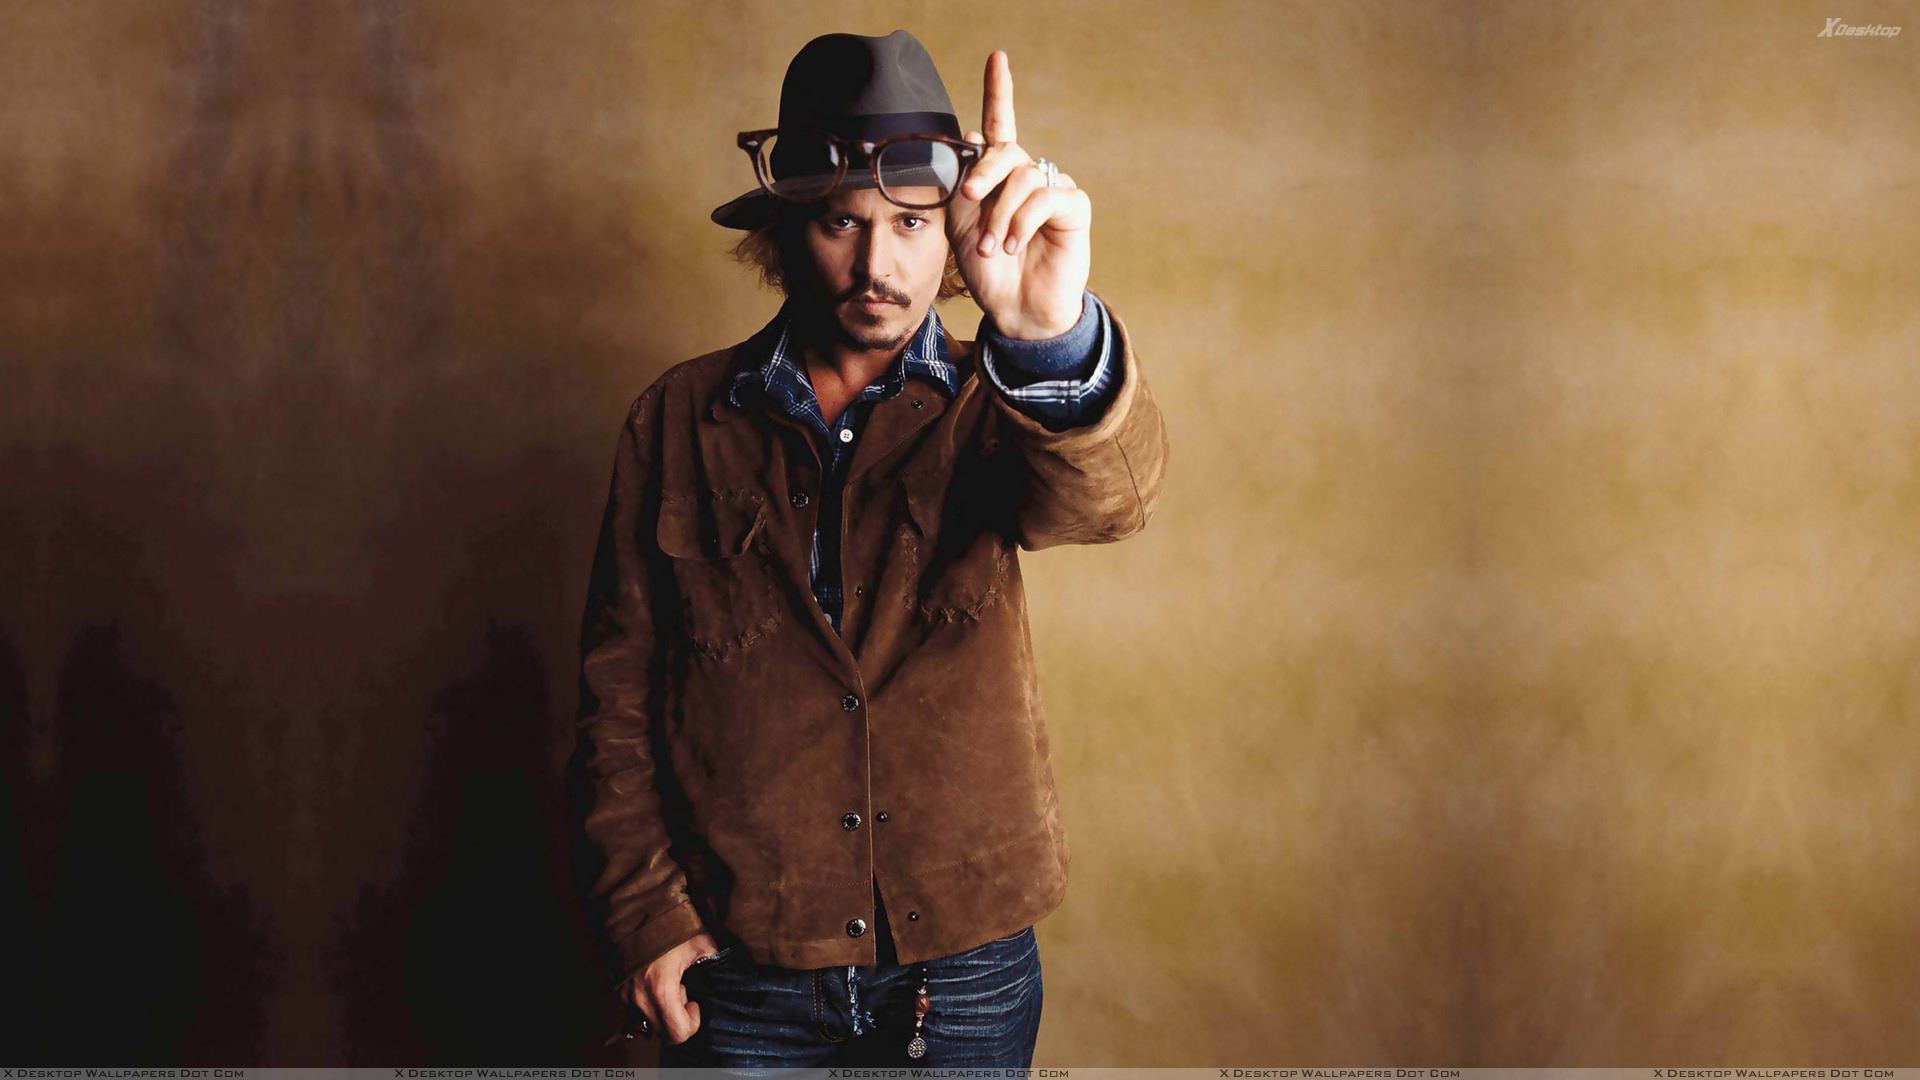 Johnny Depp Wallpaper Photos Image In HD